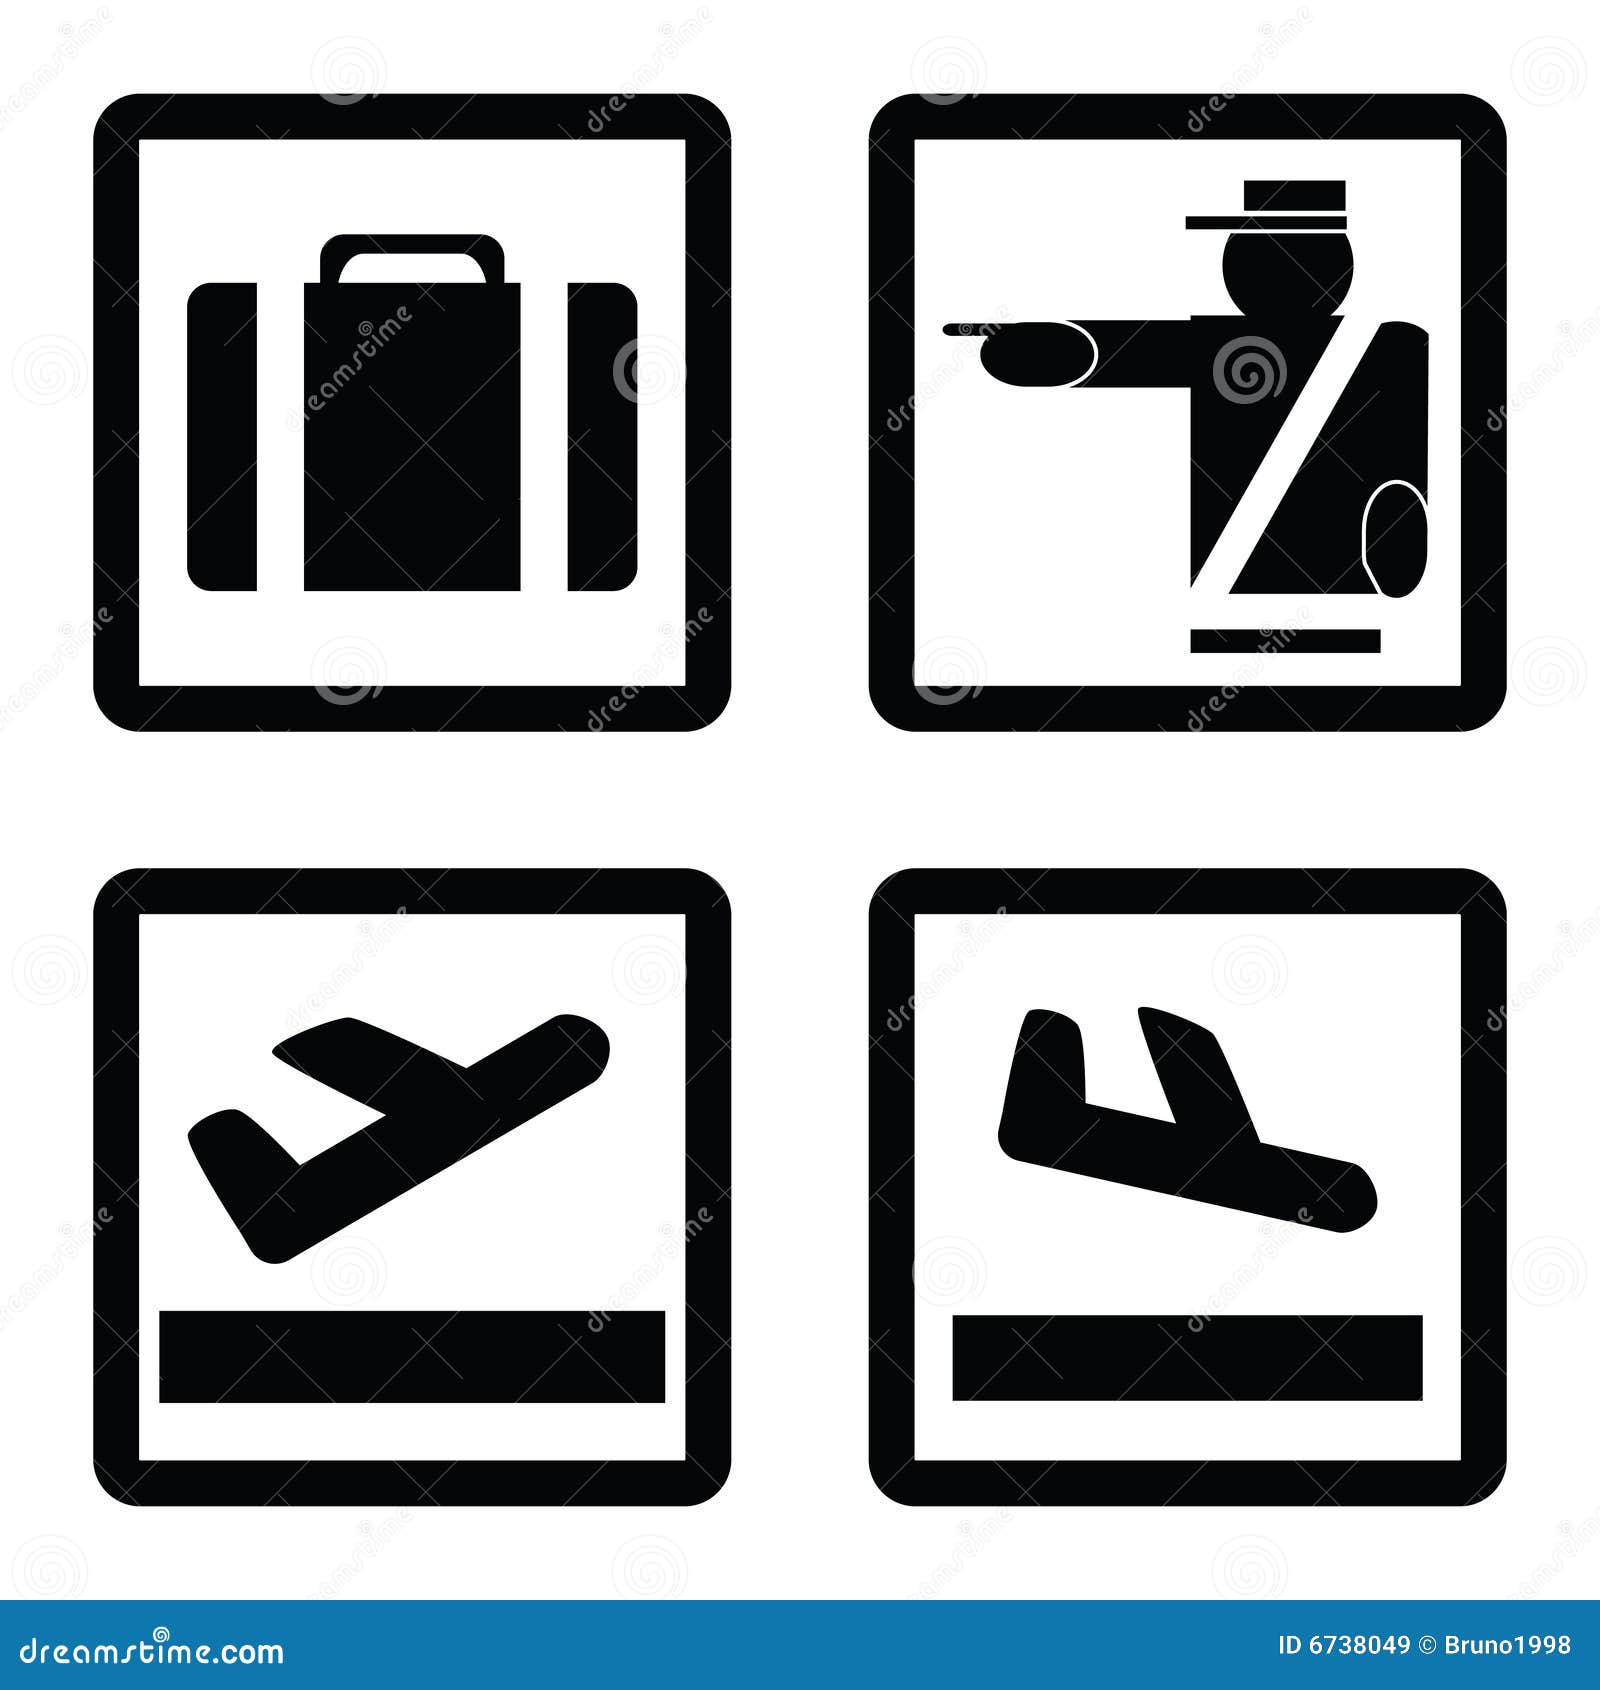 airport symbol clip art - photo #14